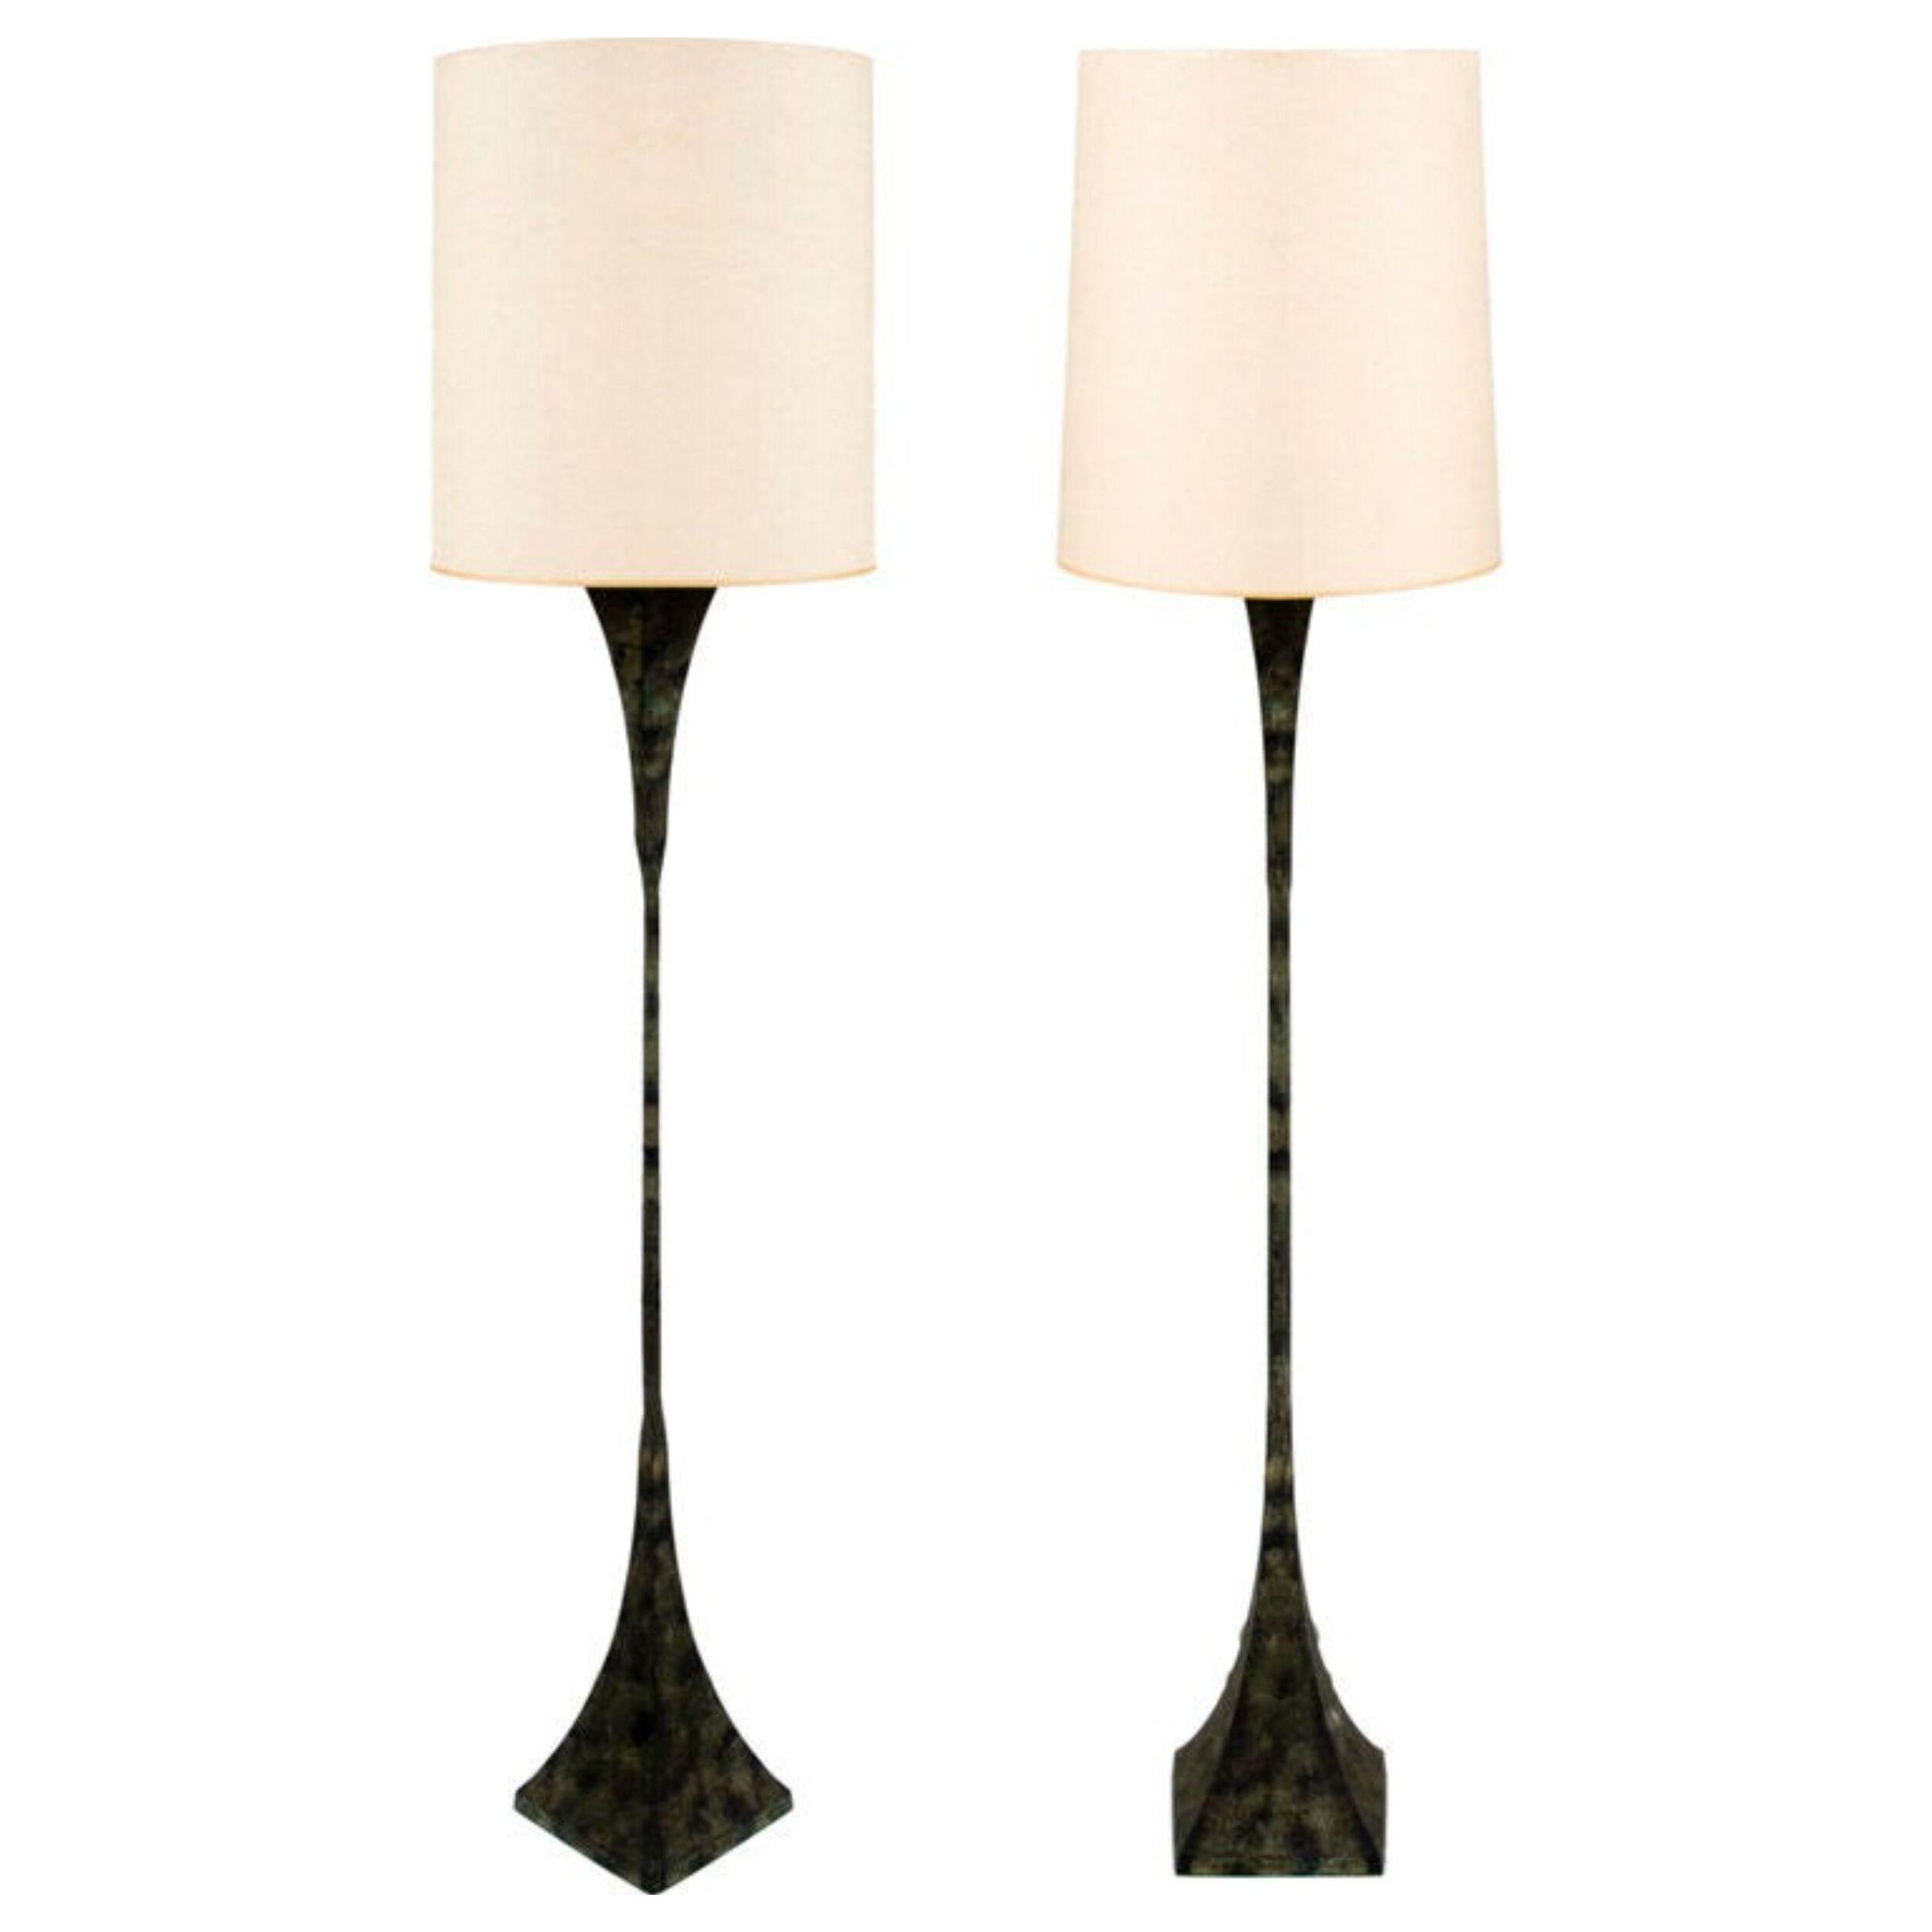 Pair of Verdigris Patinated Floor Lamps by Hansen